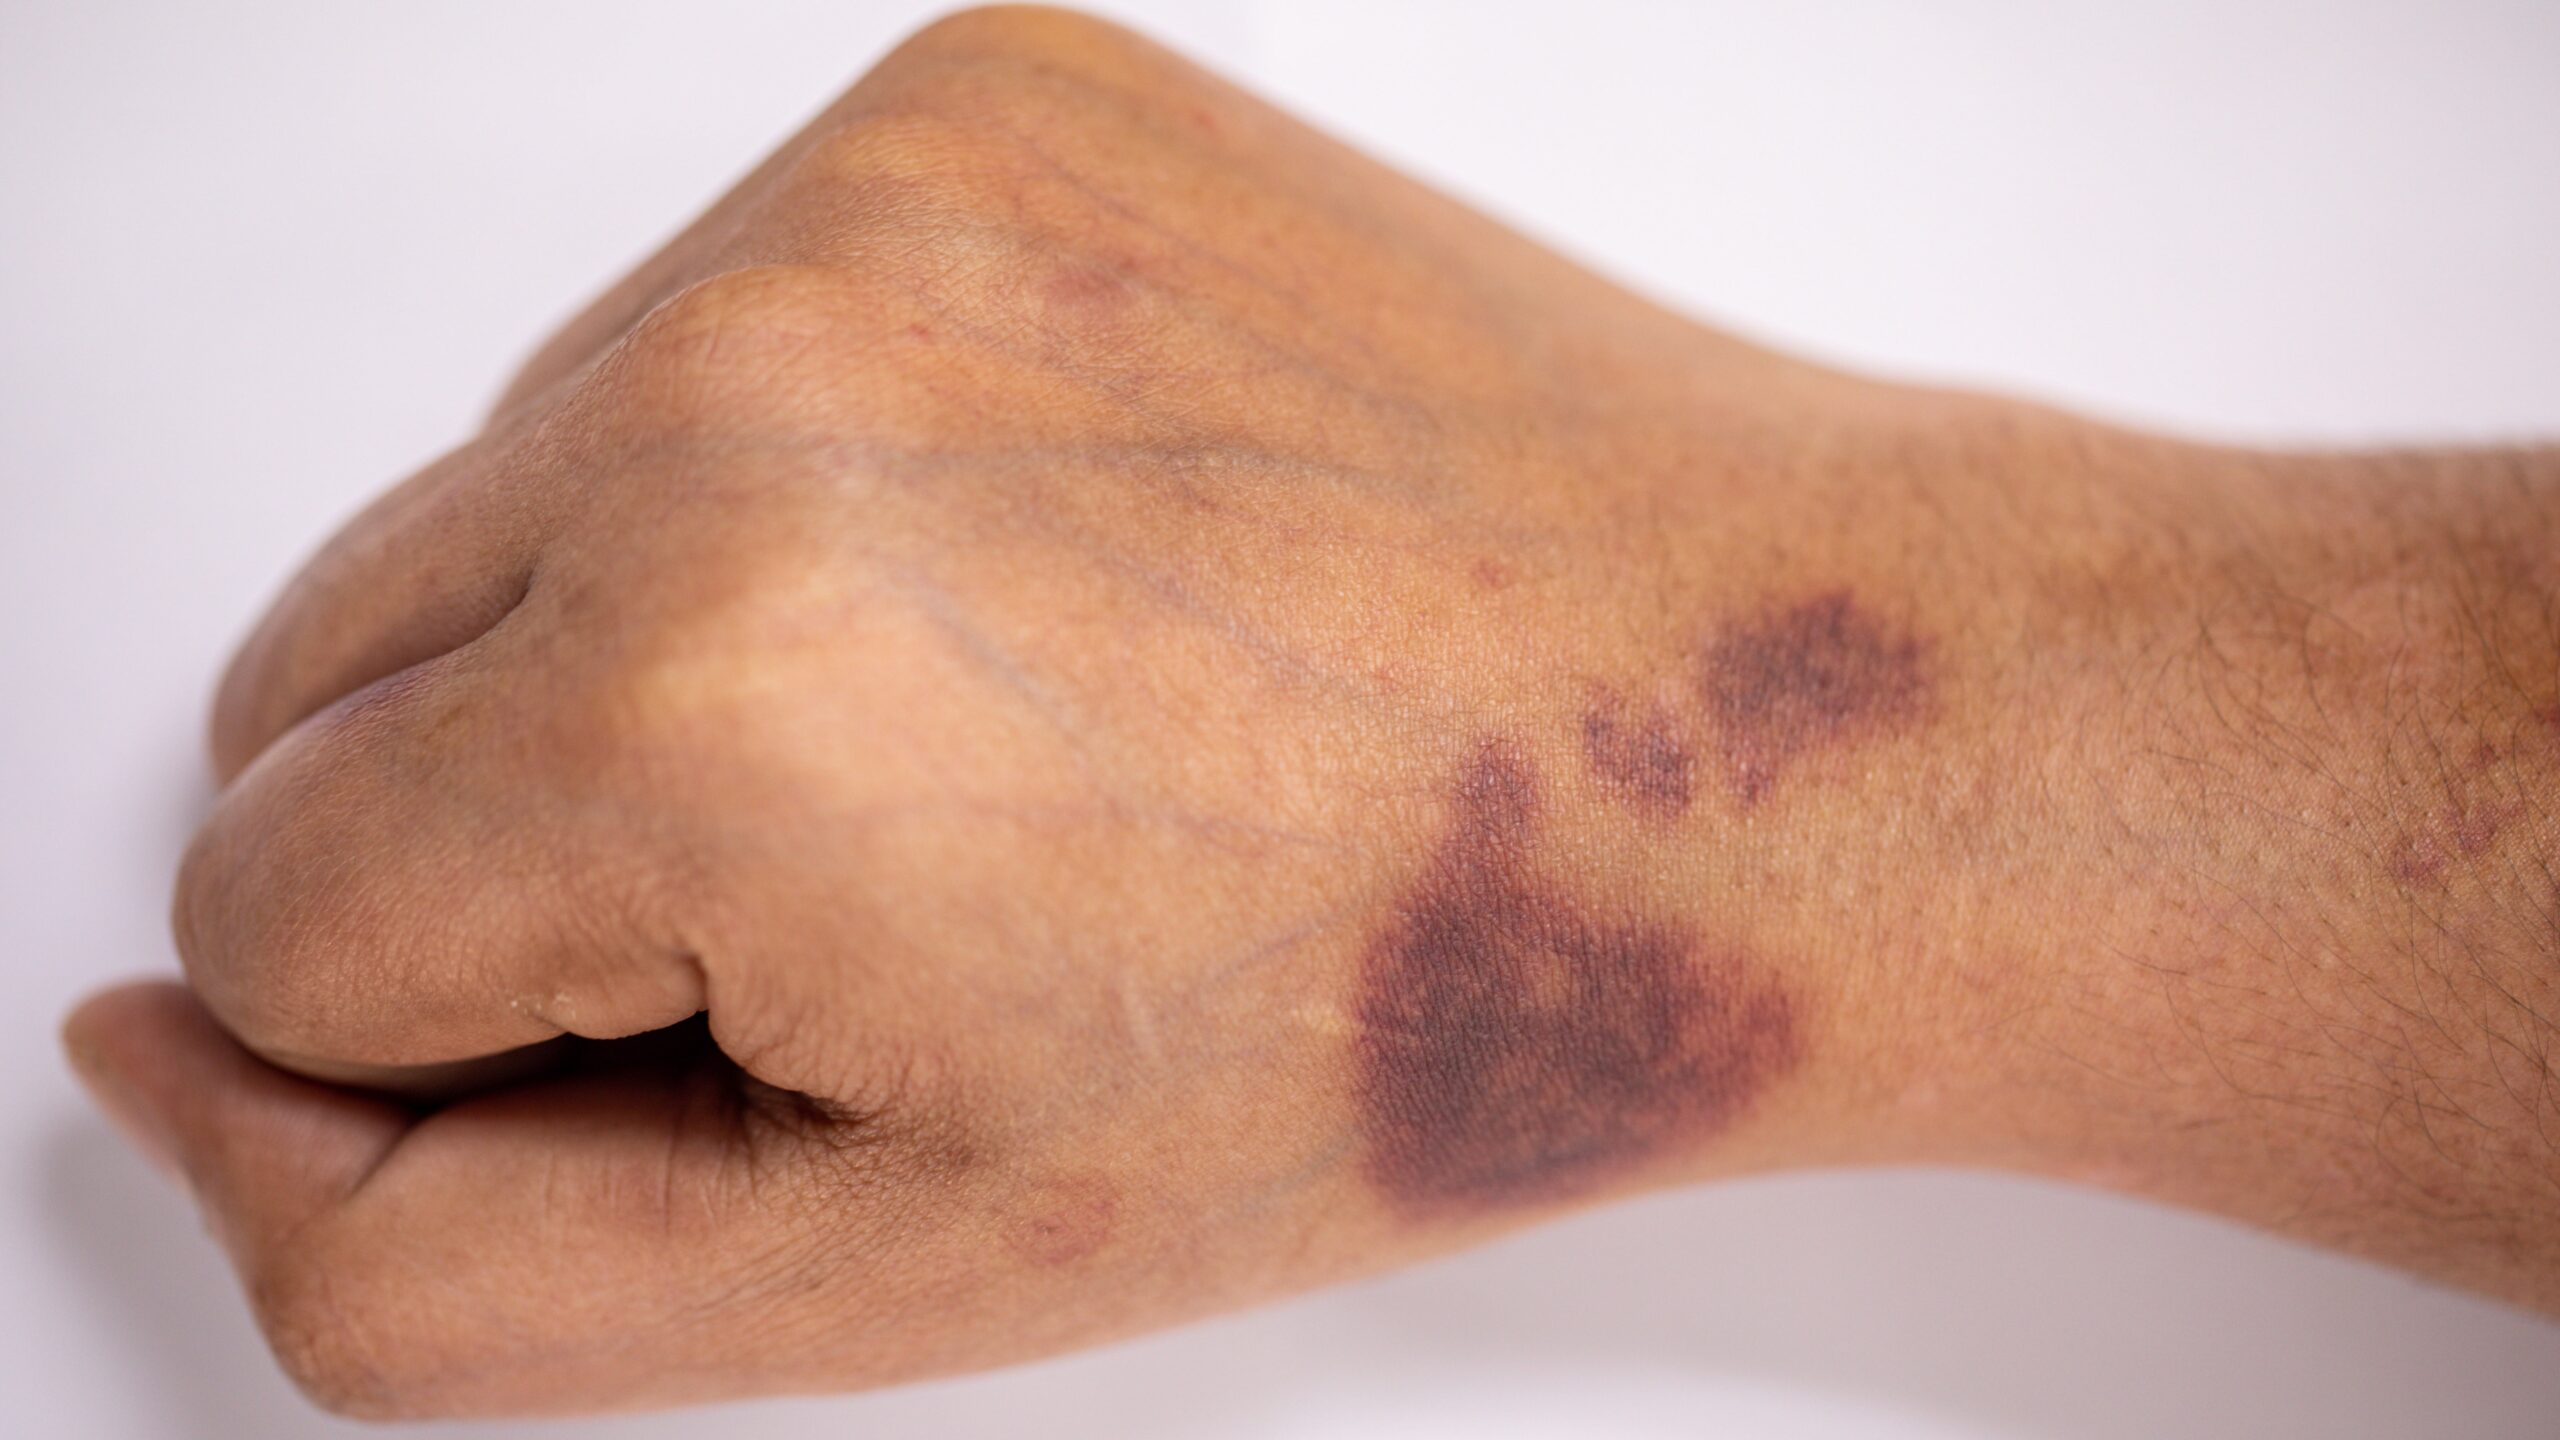 Study Examines Factors Linked With Bleeding Risk in Severe Hemophilia